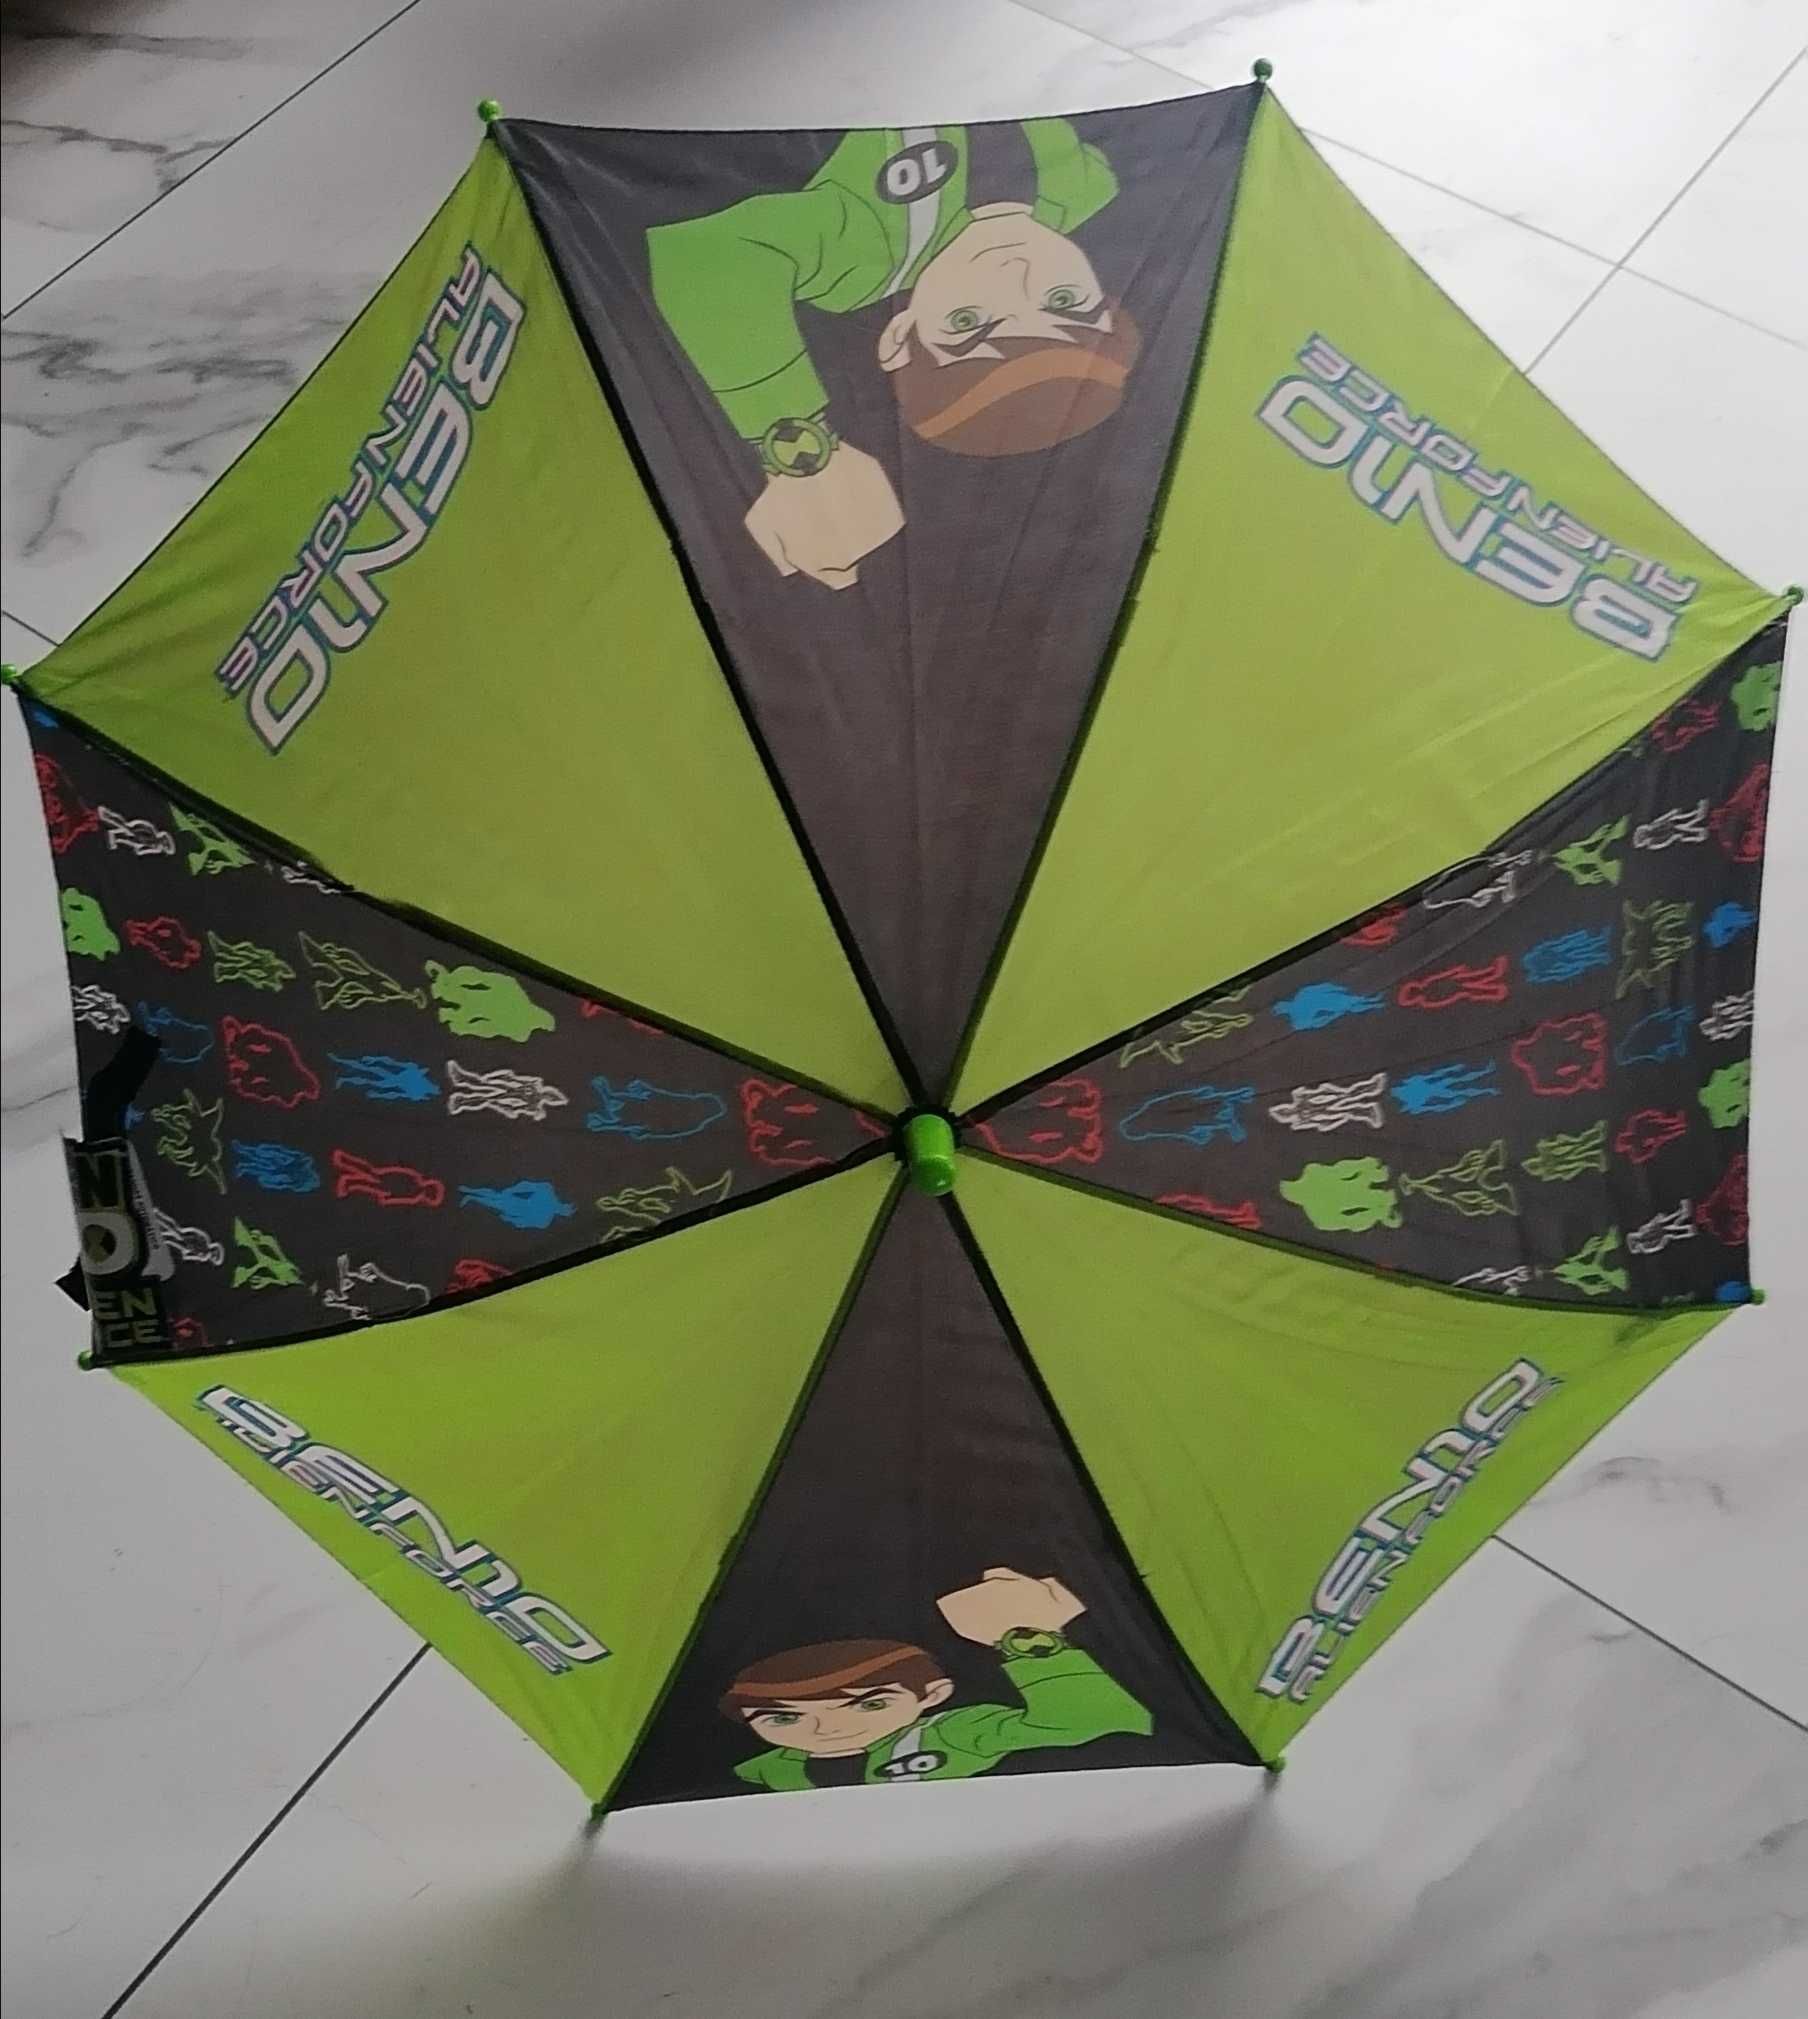 BEN 10 ALIEN FORCE parasol parasolka dla dzieci bajka bohater zielona